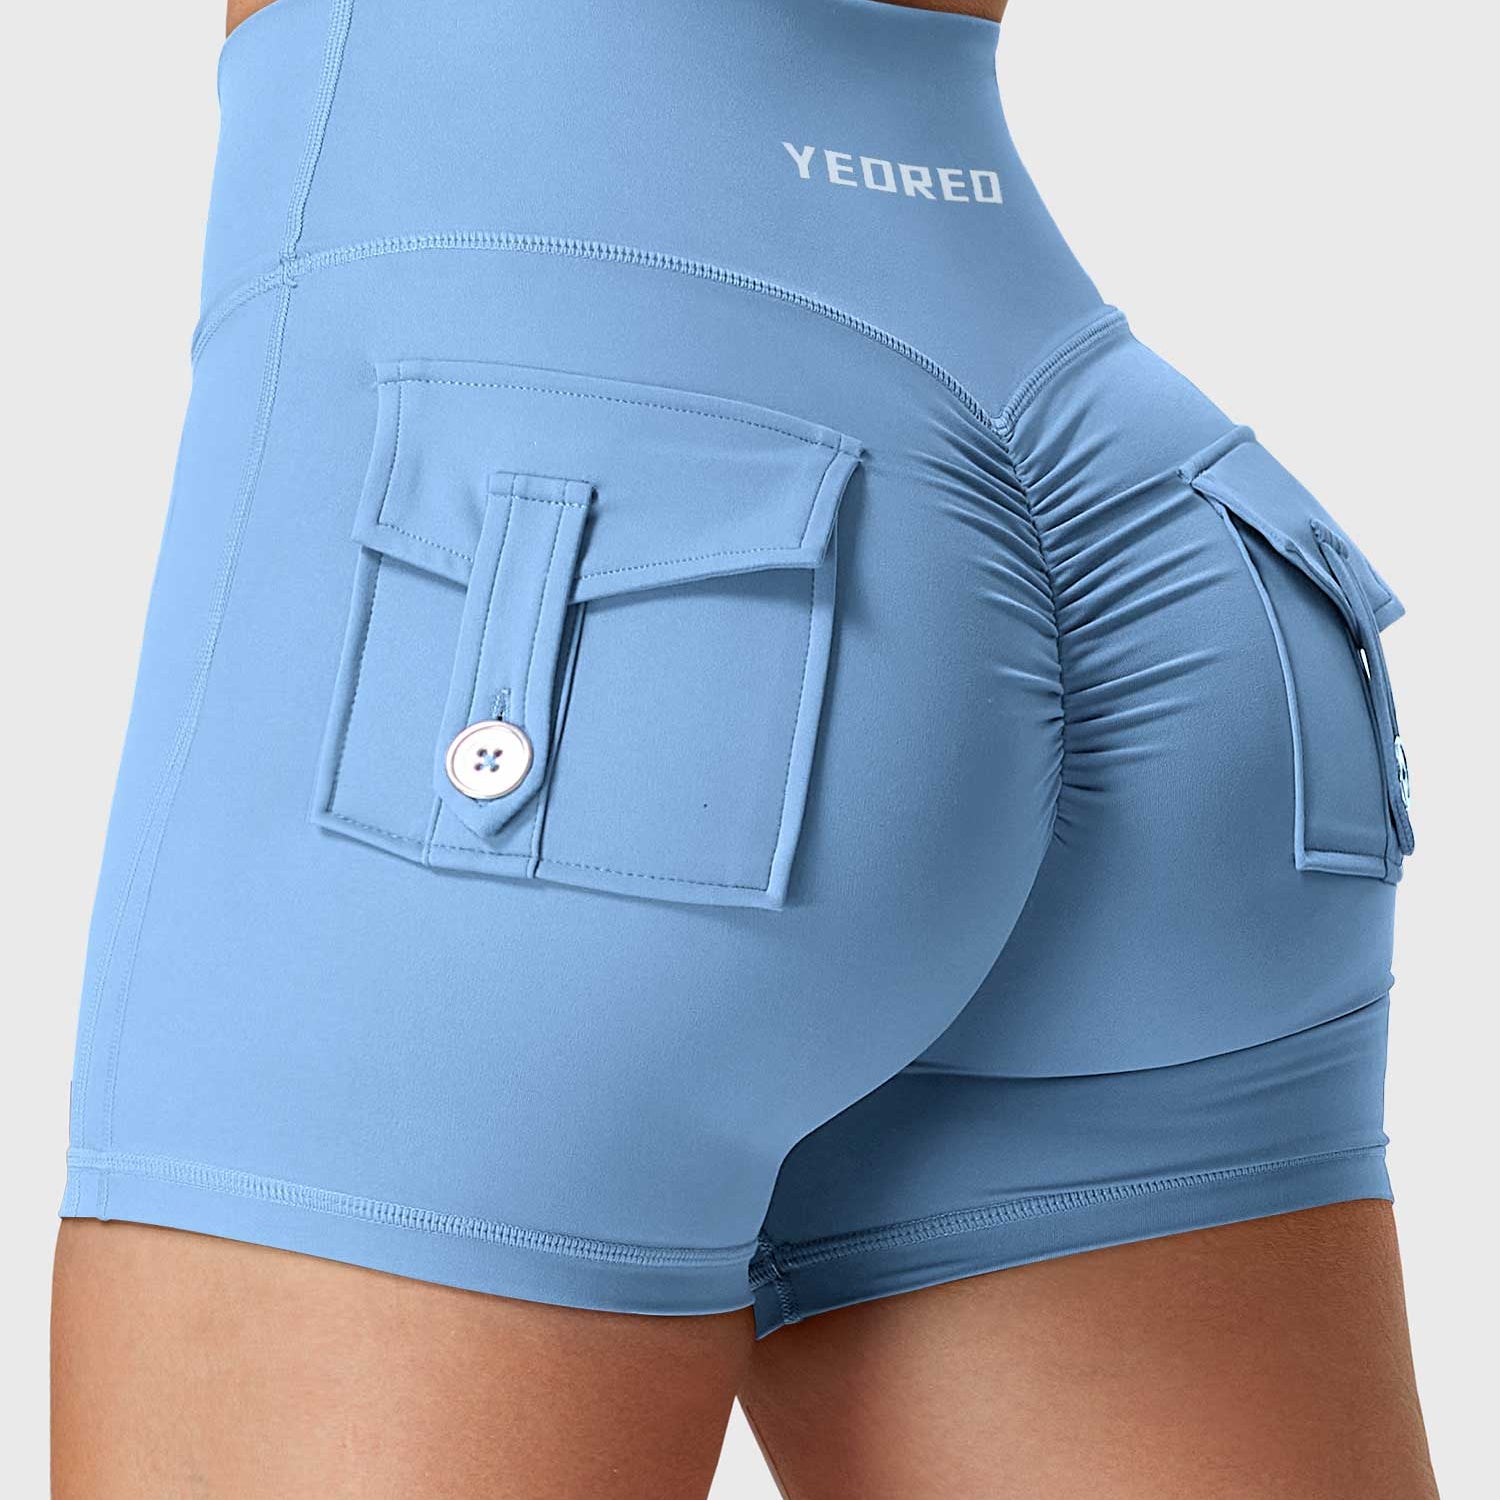 Yeoreo V-waistband Charm Shorts